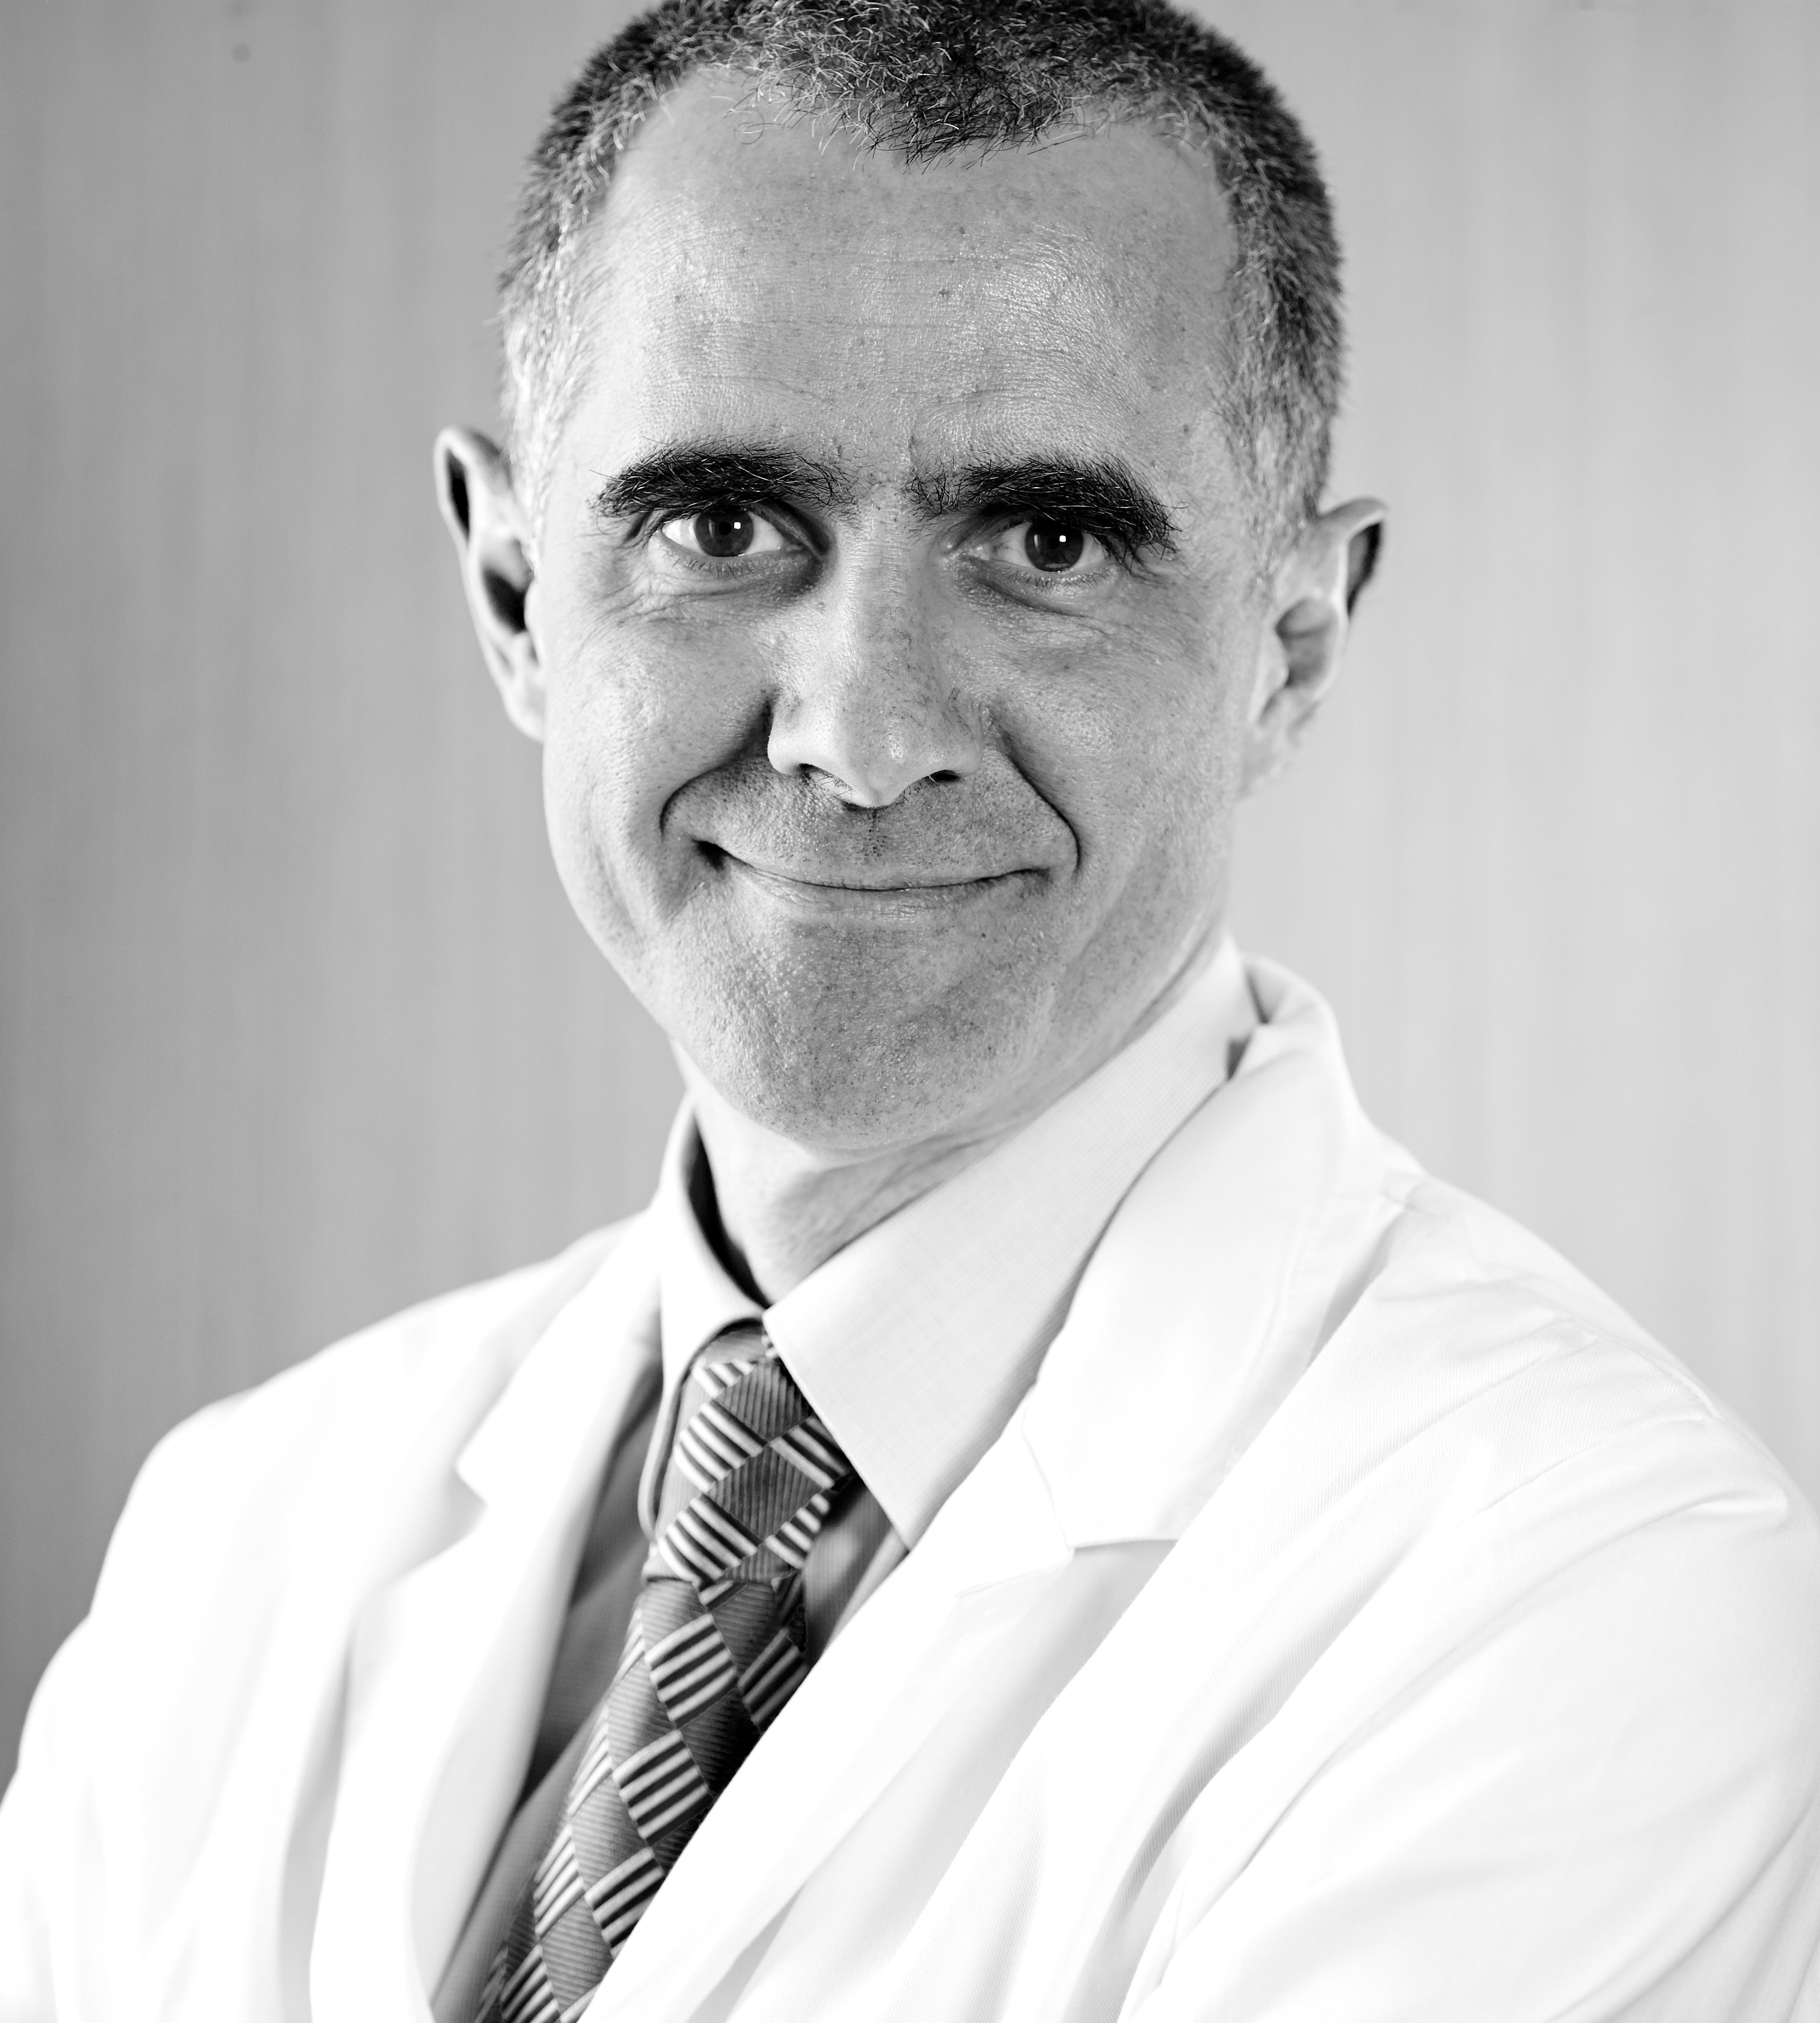 Dr. David Andreu - VERTE Oftalmología Barcelona